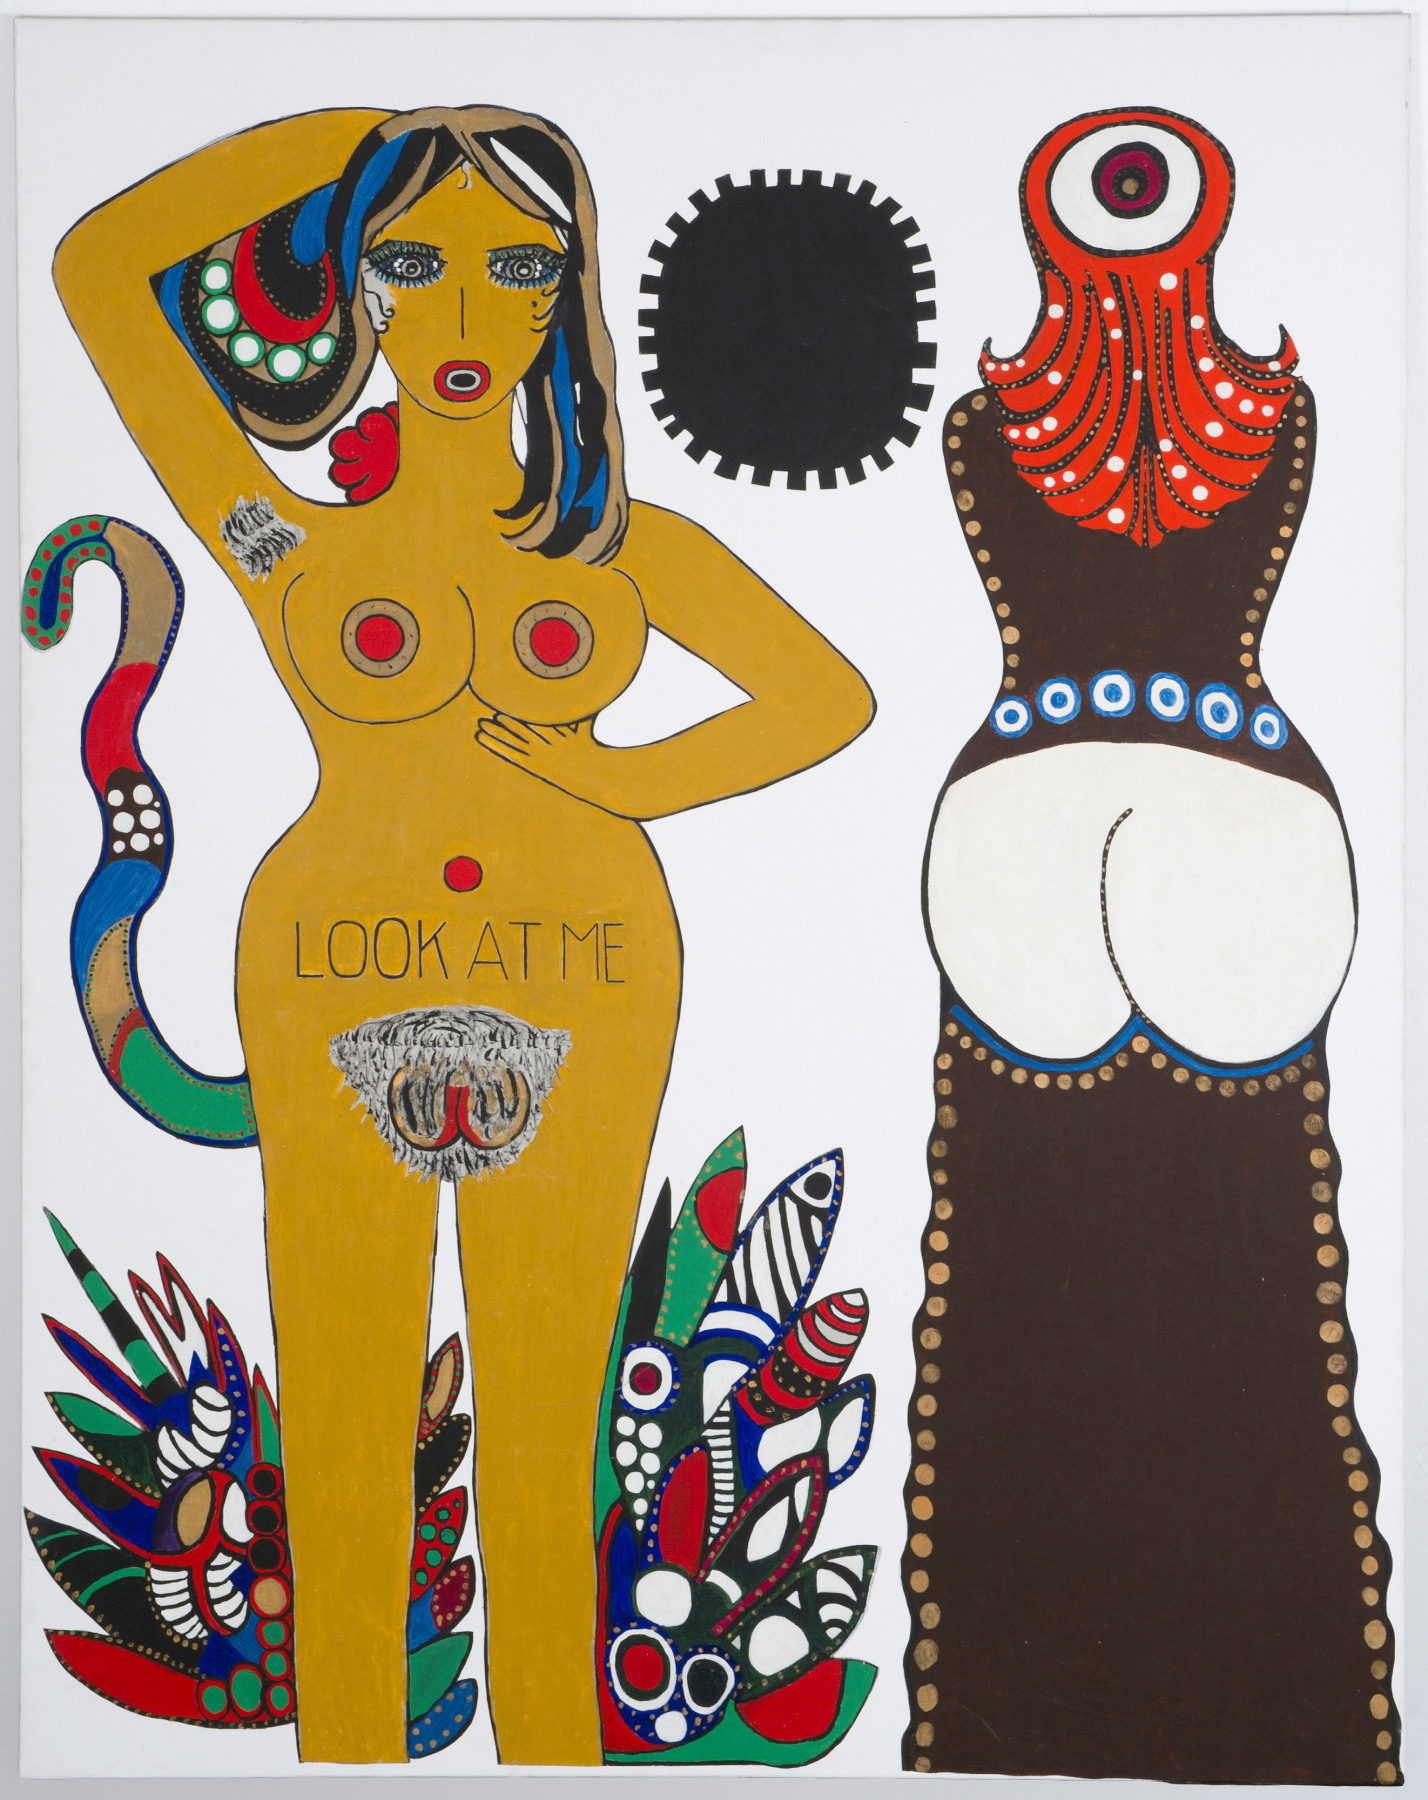 Dorothy Iannone, &quot;Look at Me&quot;,&nbsp;1970/71Collage and acrylic on canvas, 190 x 150 cm&copy; Photo Jochen Littkemann, BerlinCourtesy of the artist and Air de Paris, Paris